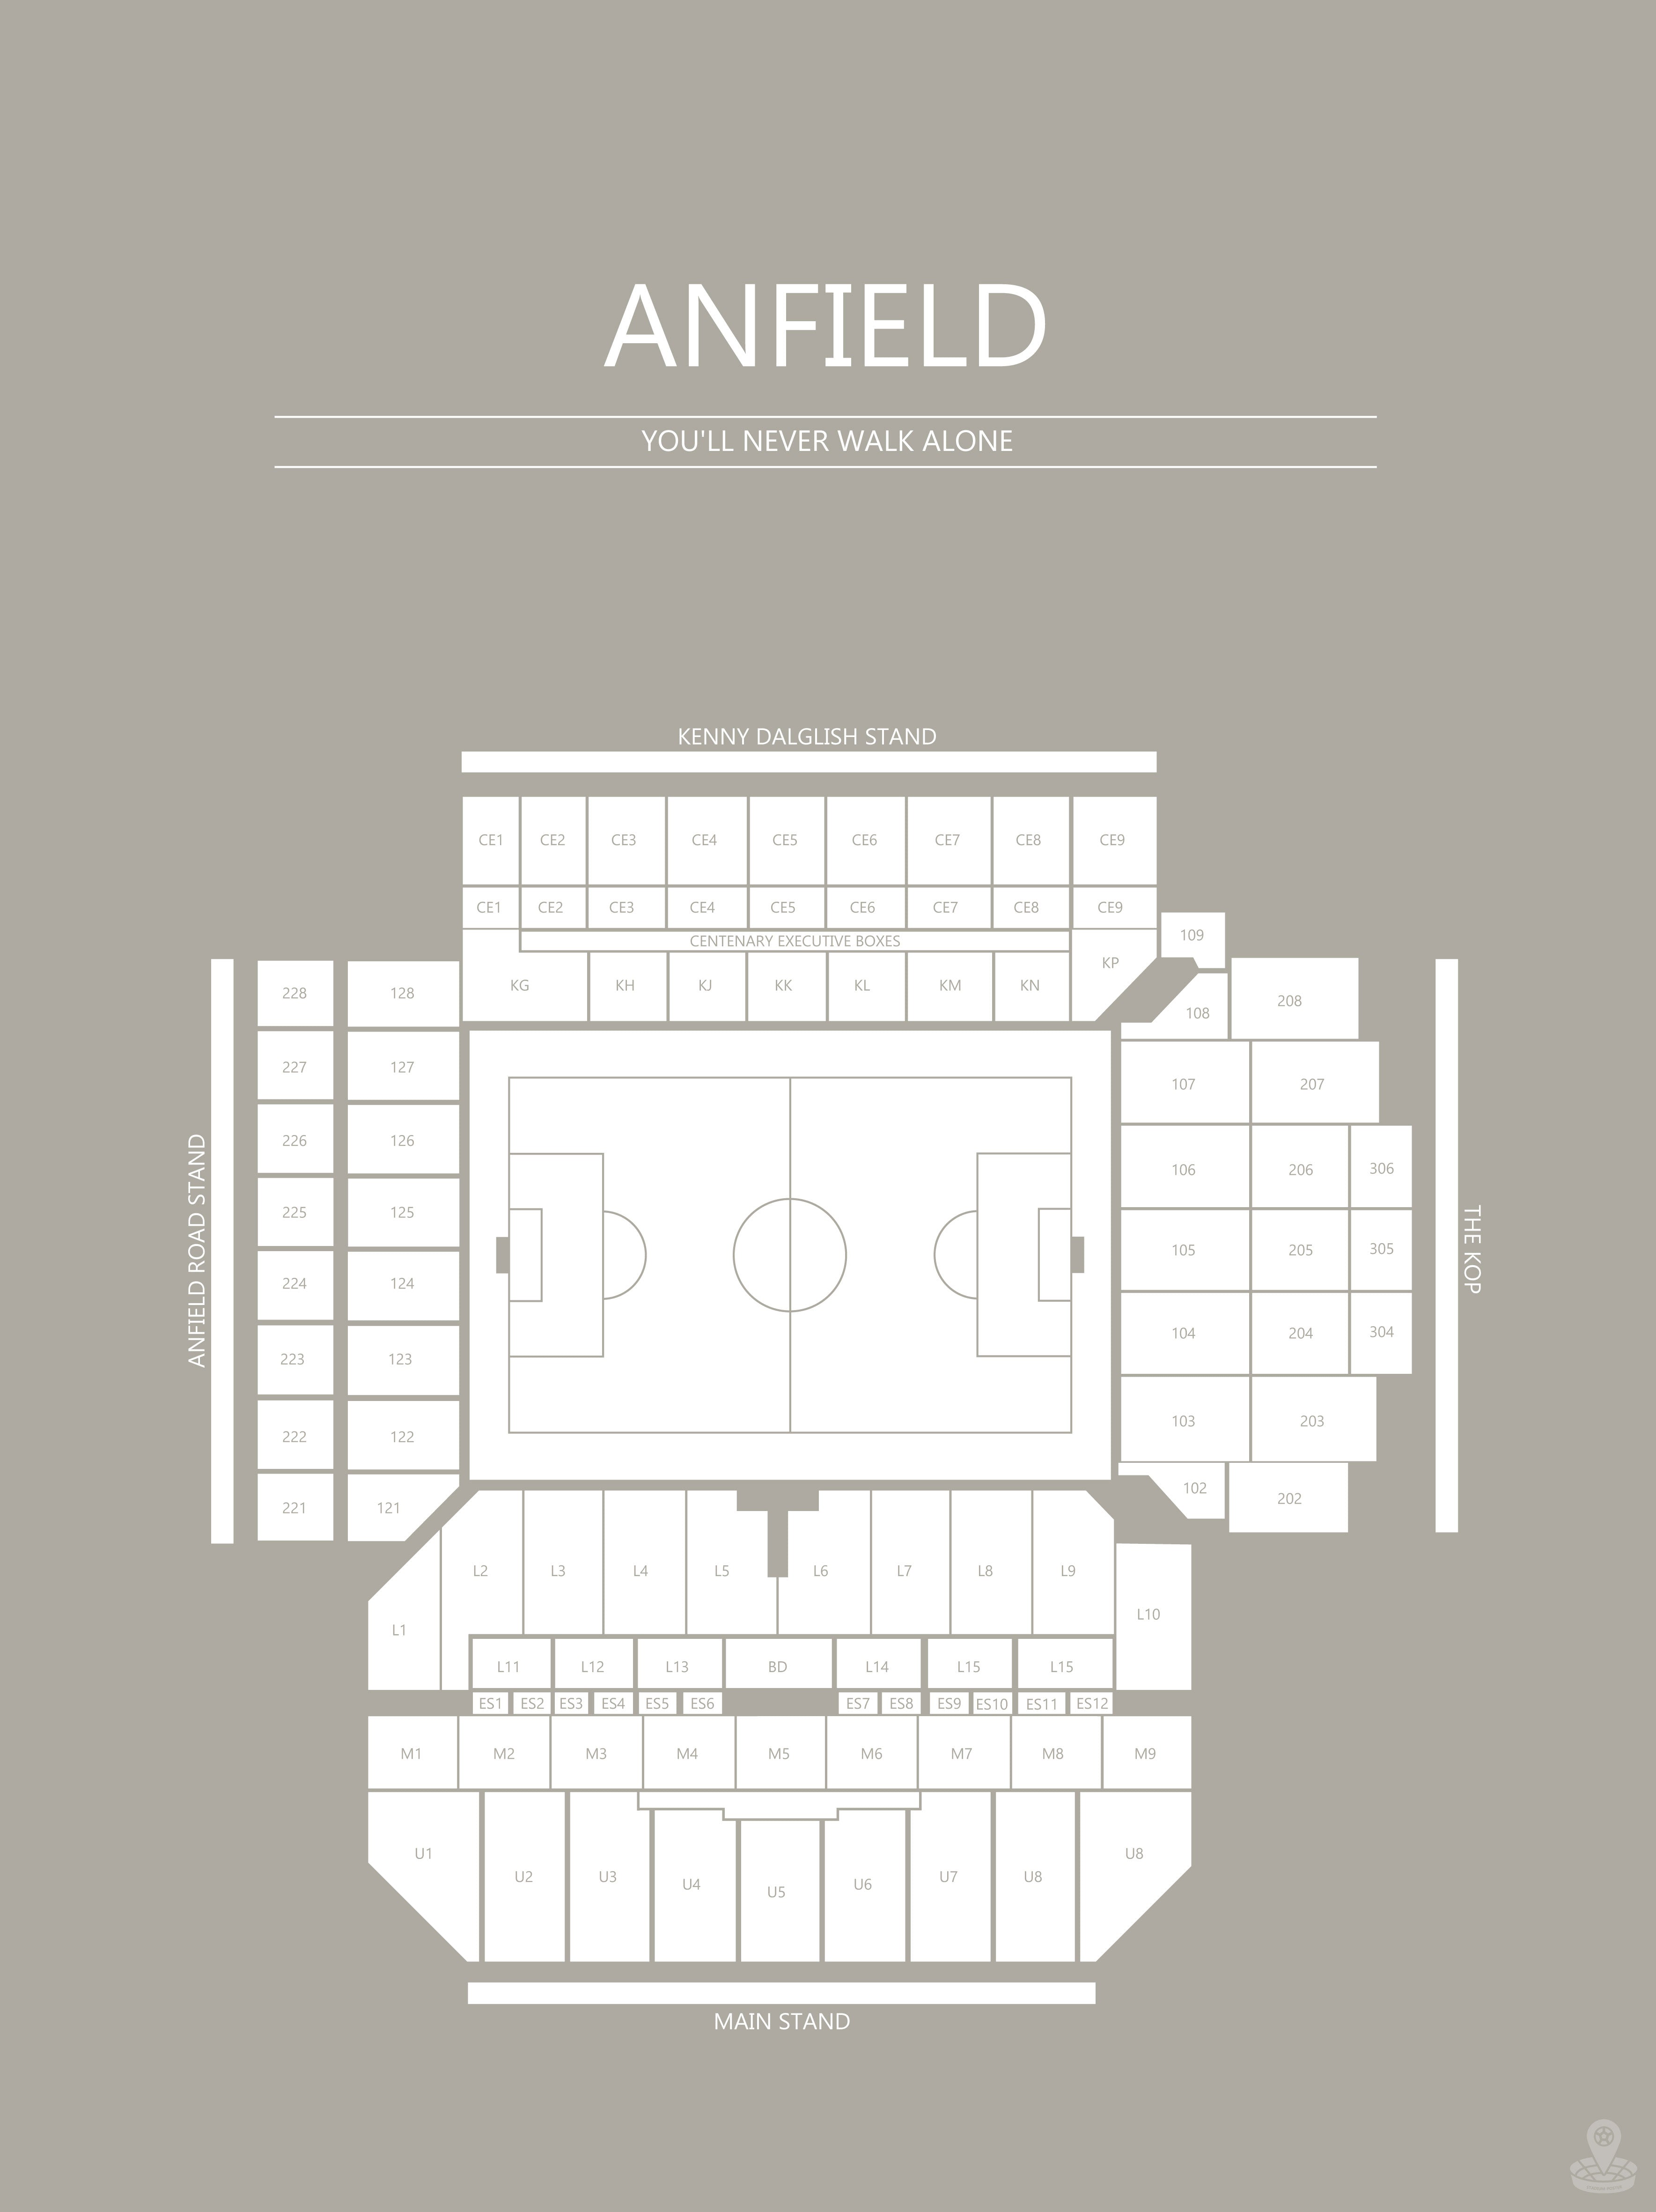 Fodbold plakat Liverpool Anfield stadium i grå